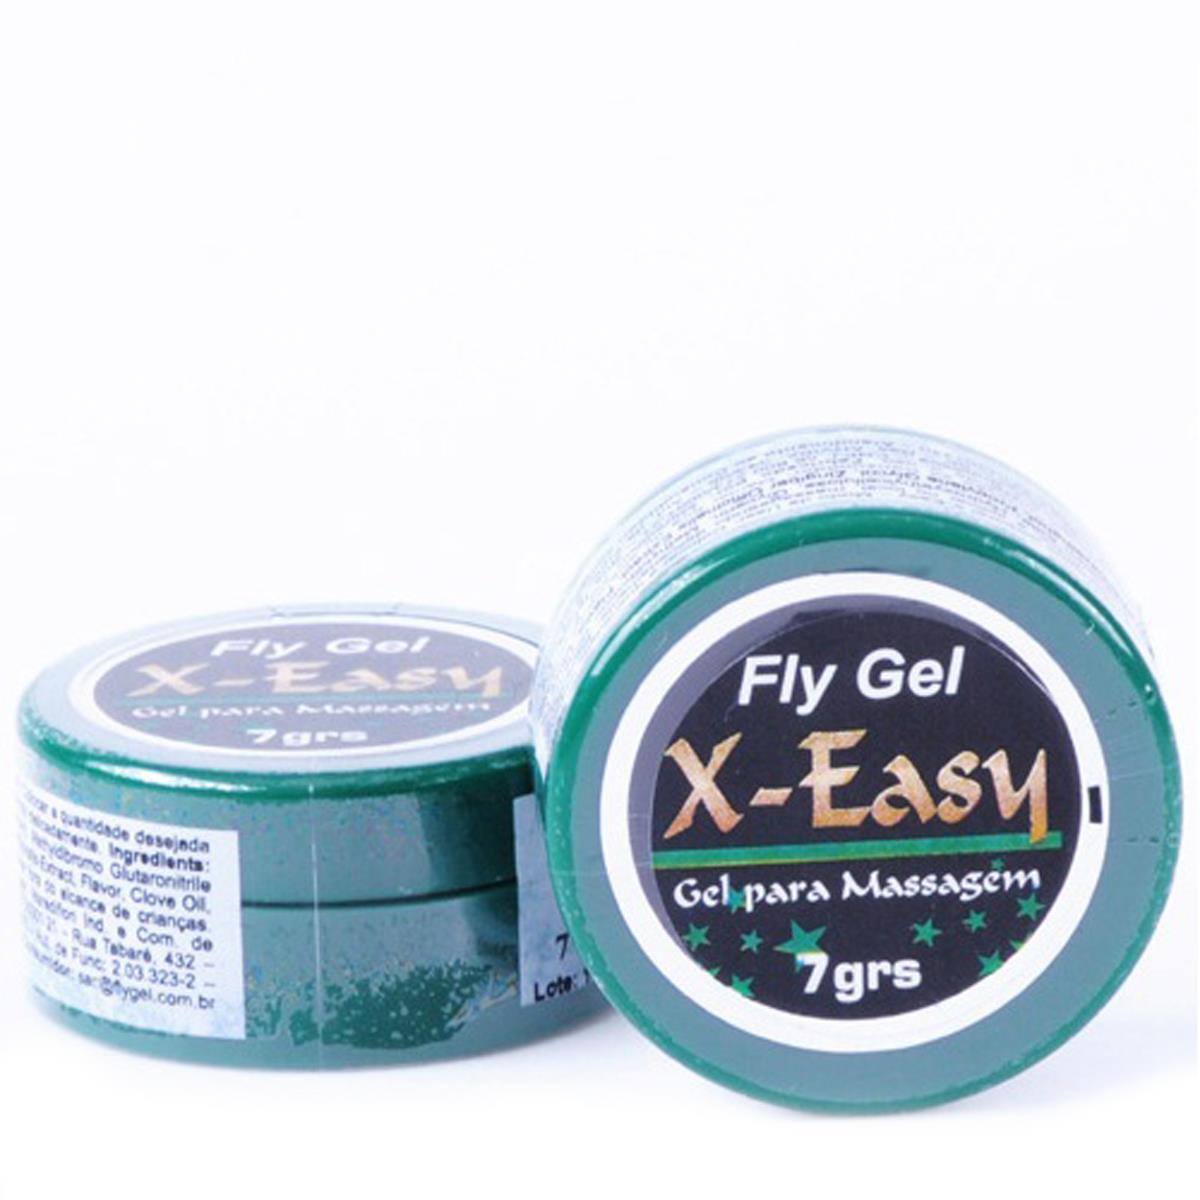 X-Easy Fly Gel 7g K Import & Export